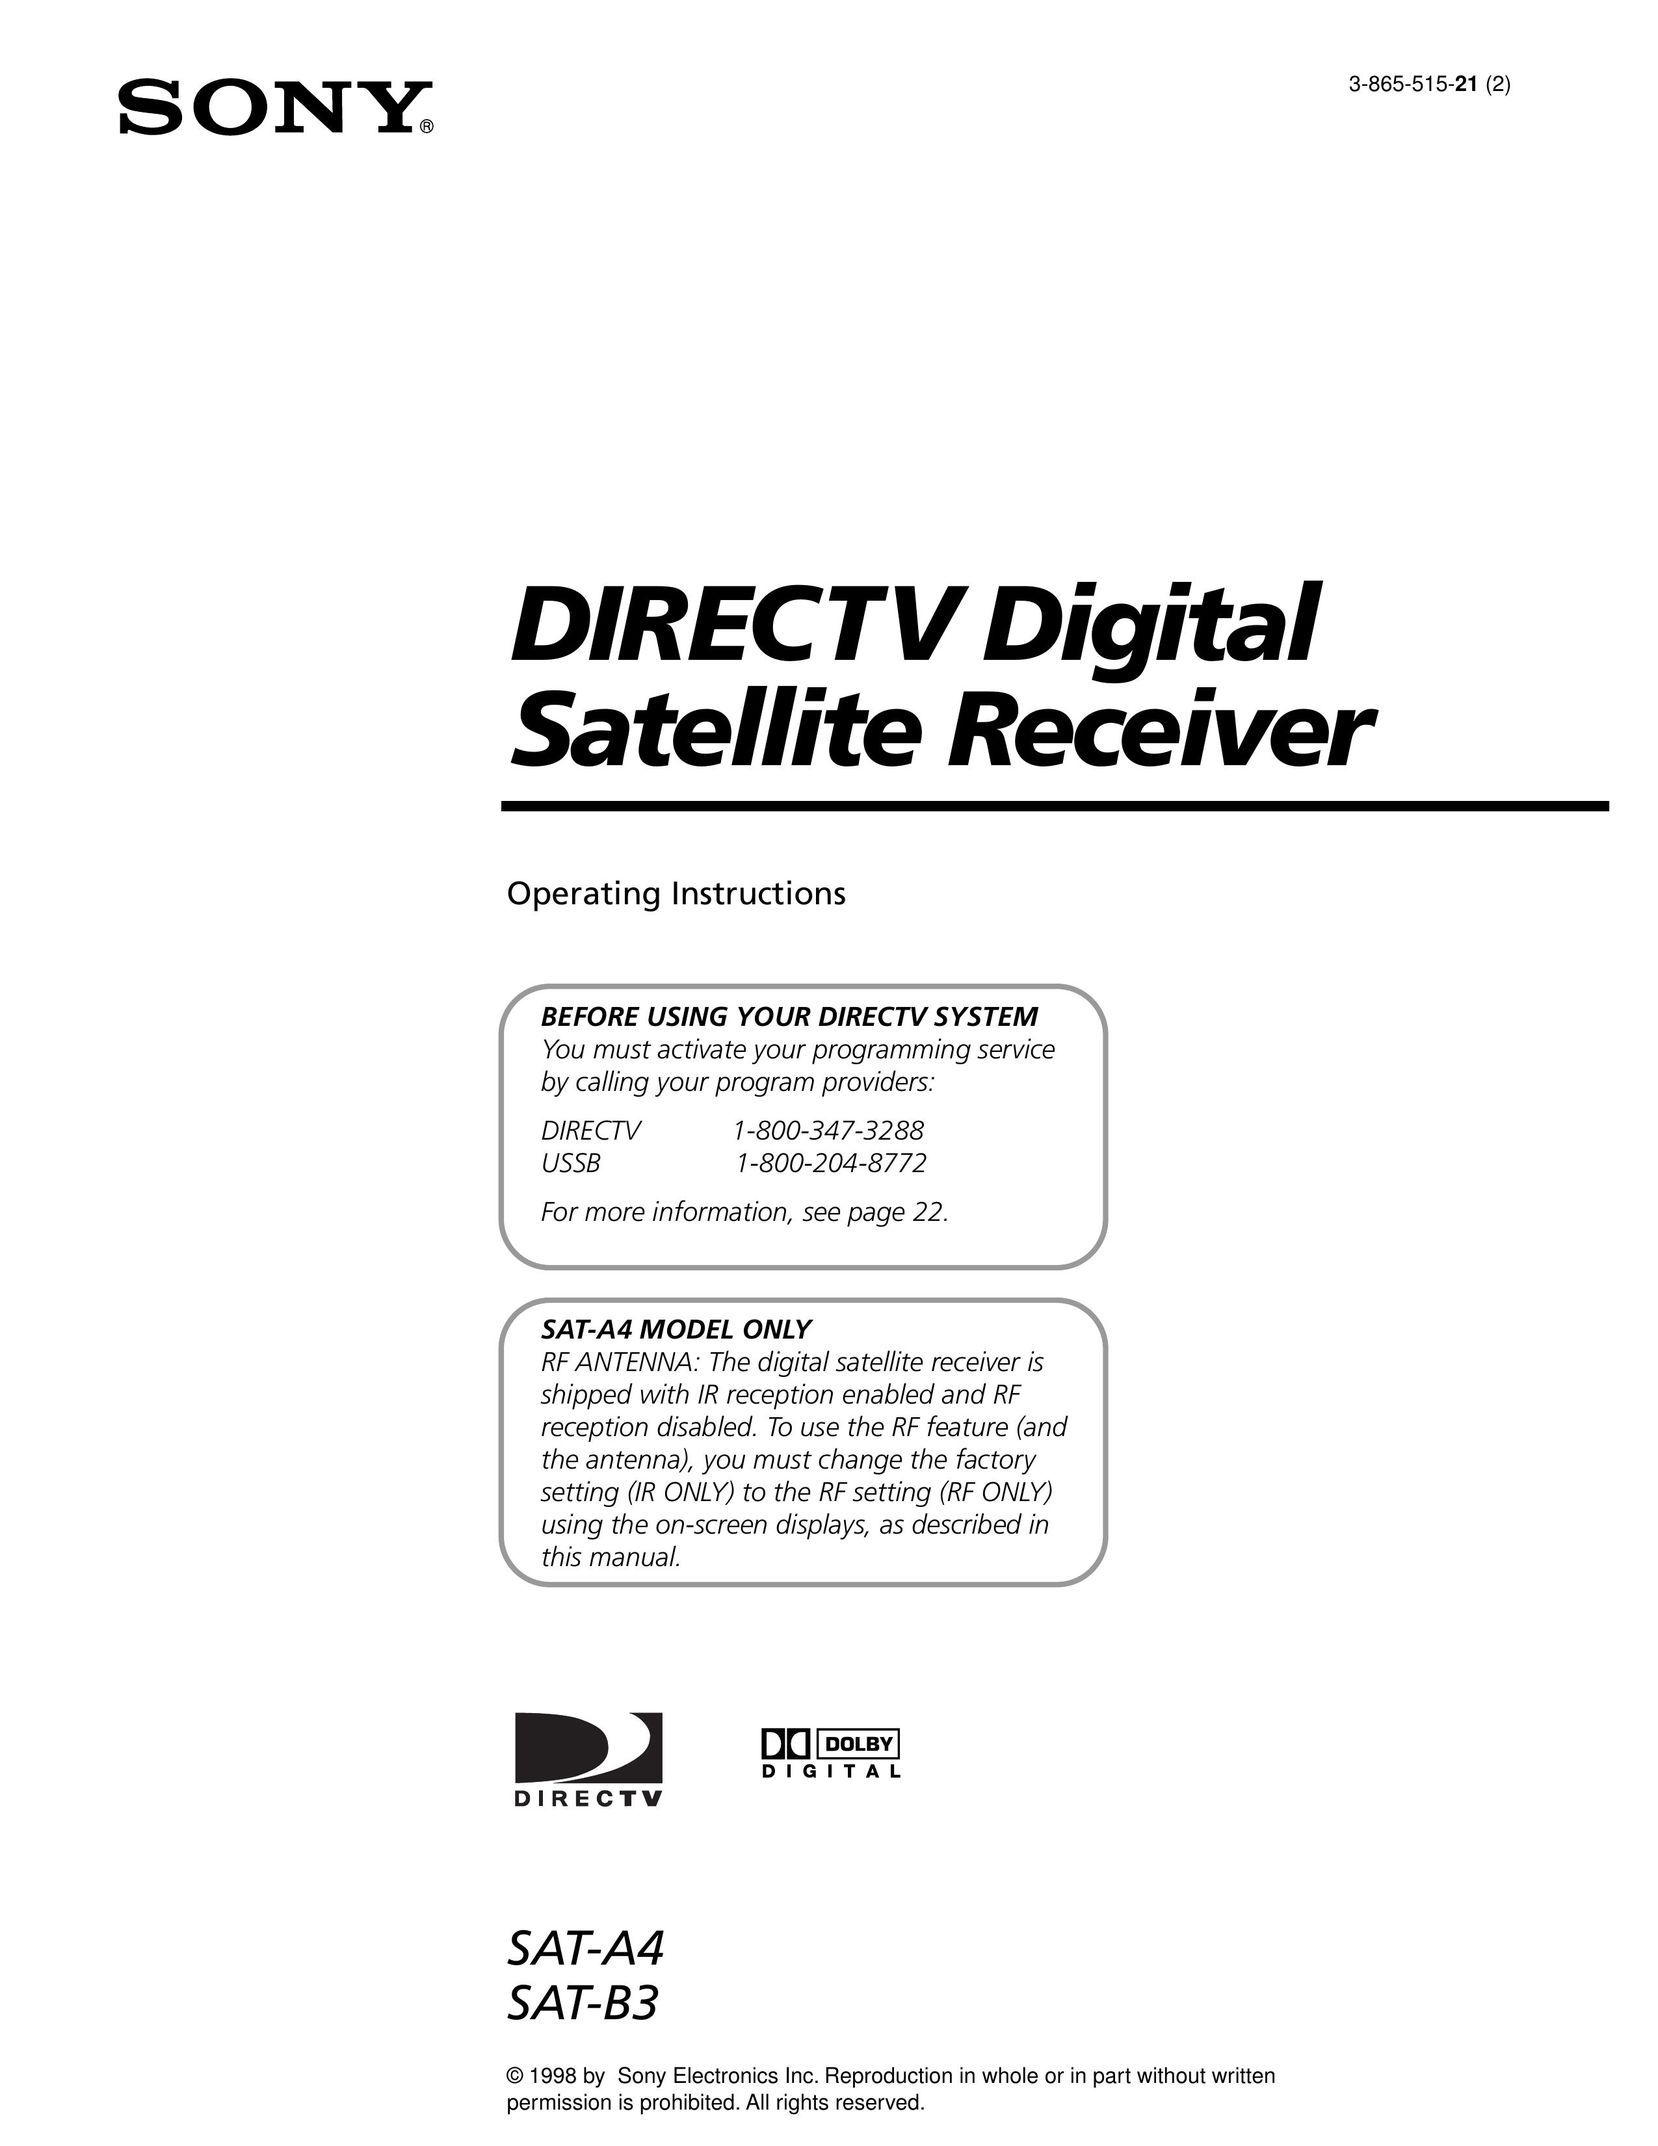 Sony SAT-B3 Satellite TV System User Manual